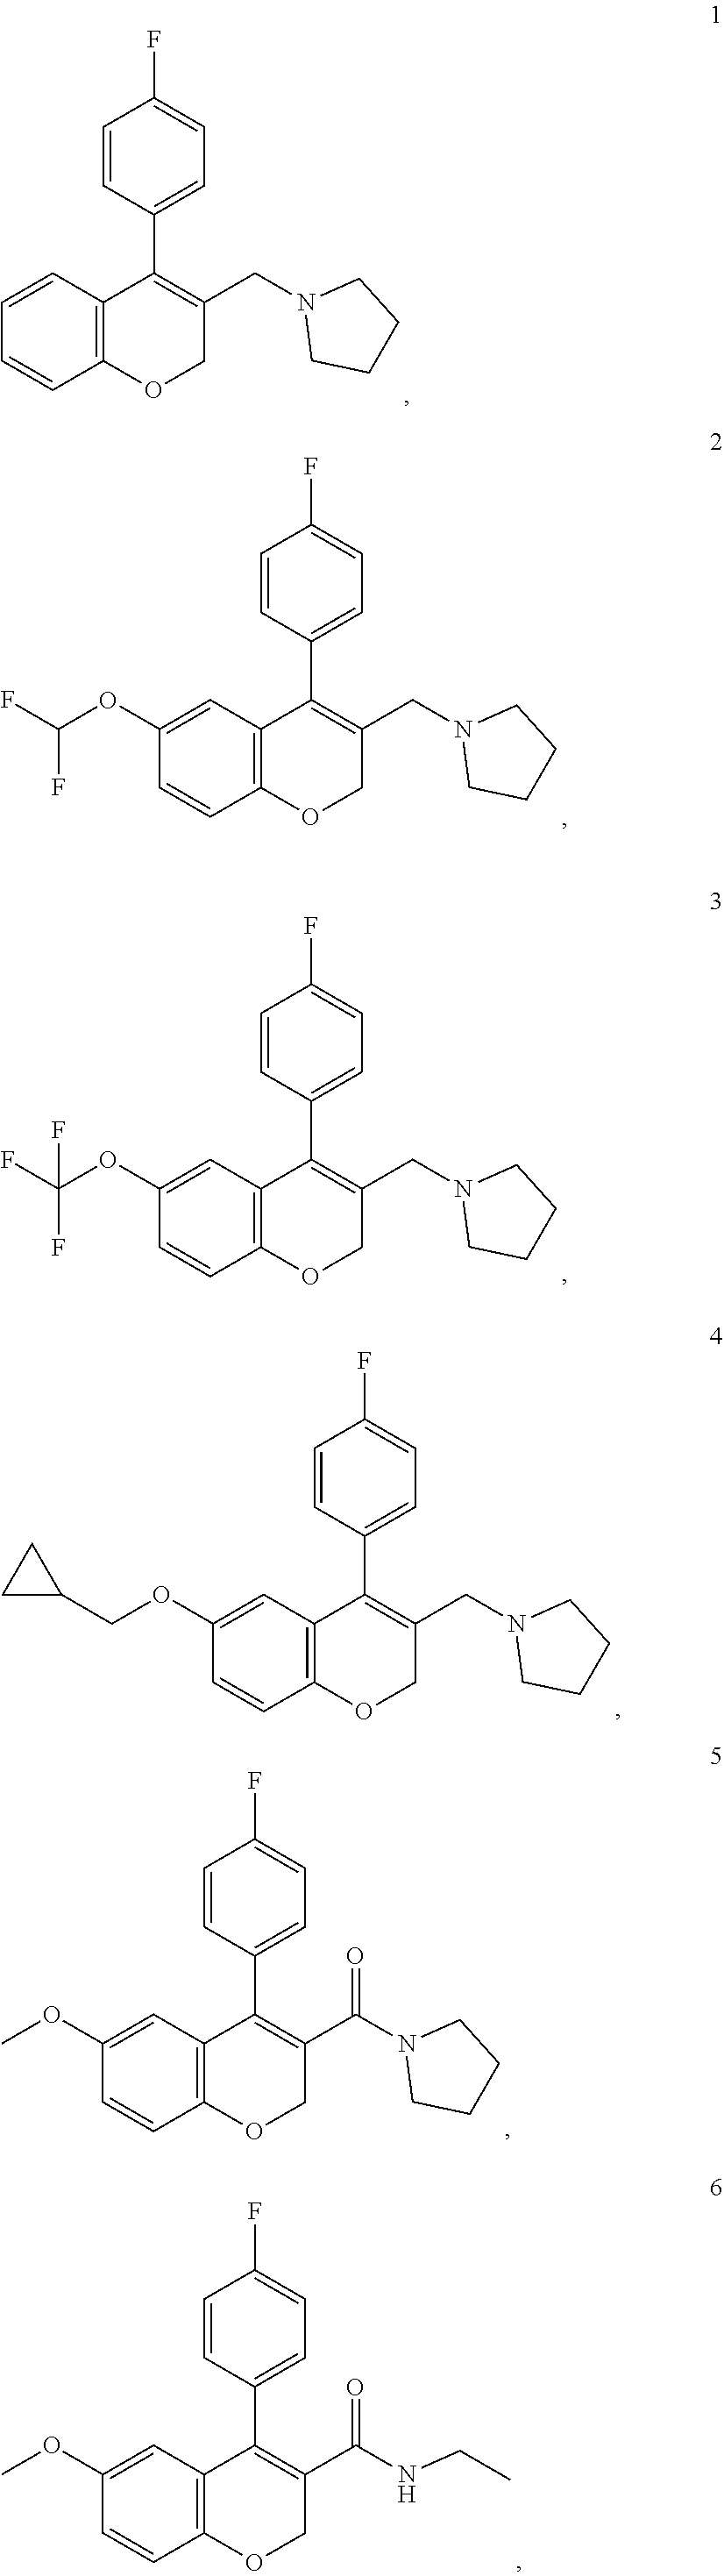 Chromene derivatives as inhibitors of tcr-nck interaction